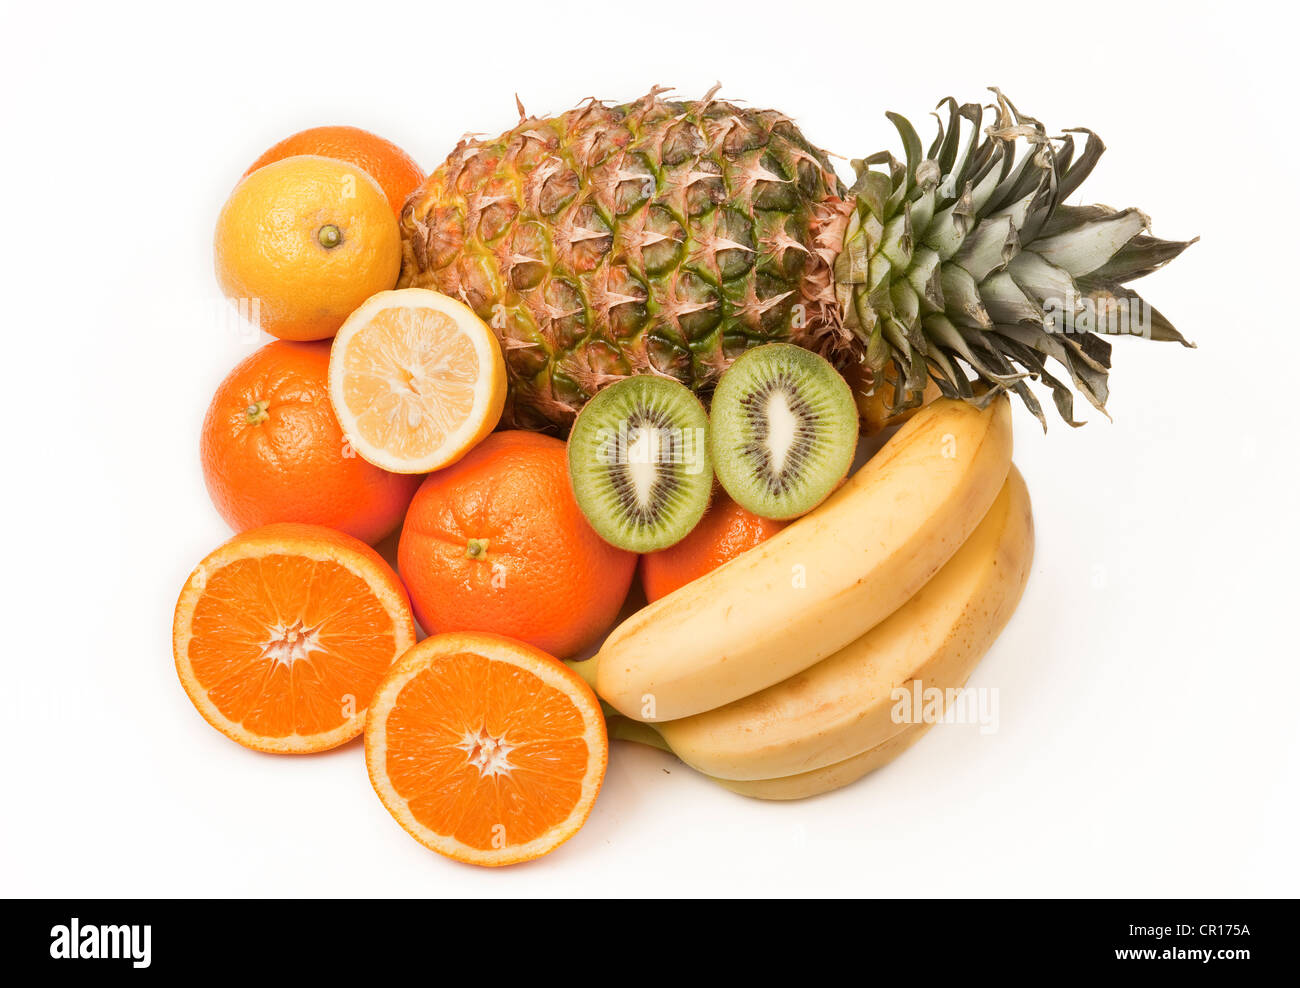 Variety of fruits, a pineapple, a kiwi fruit, oranges, a lemon and bananas Stock Photo